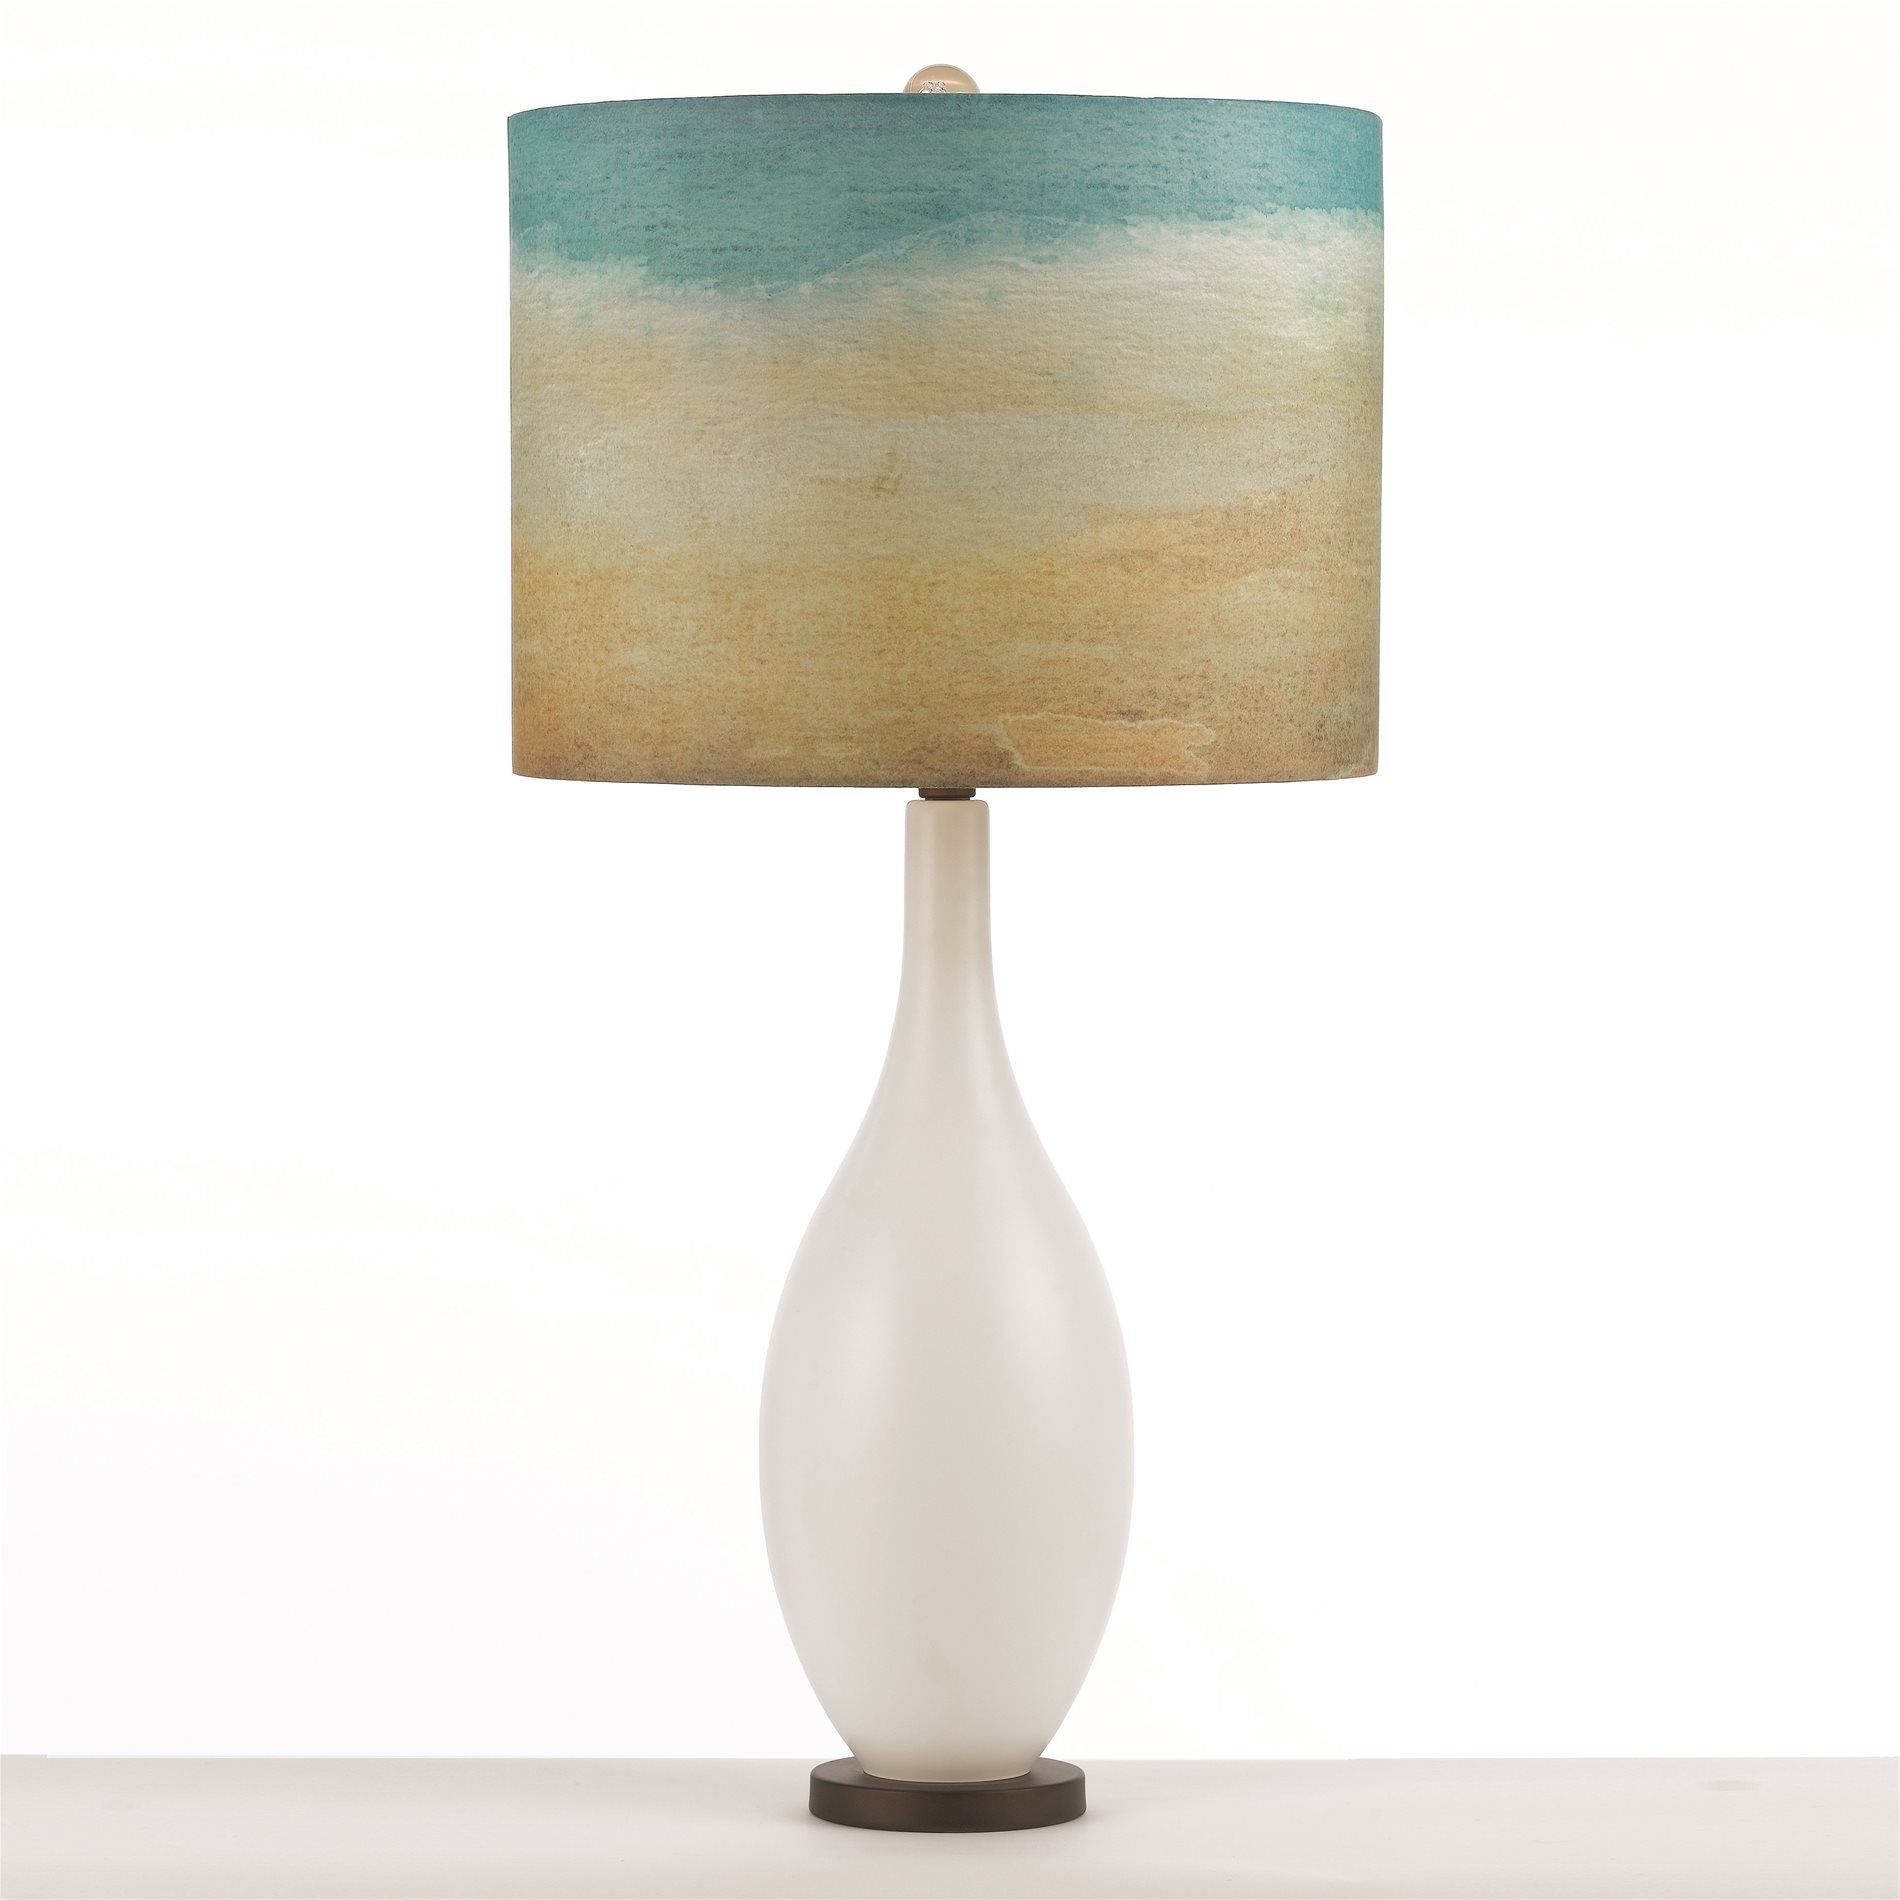 The look serene seaside table lamp